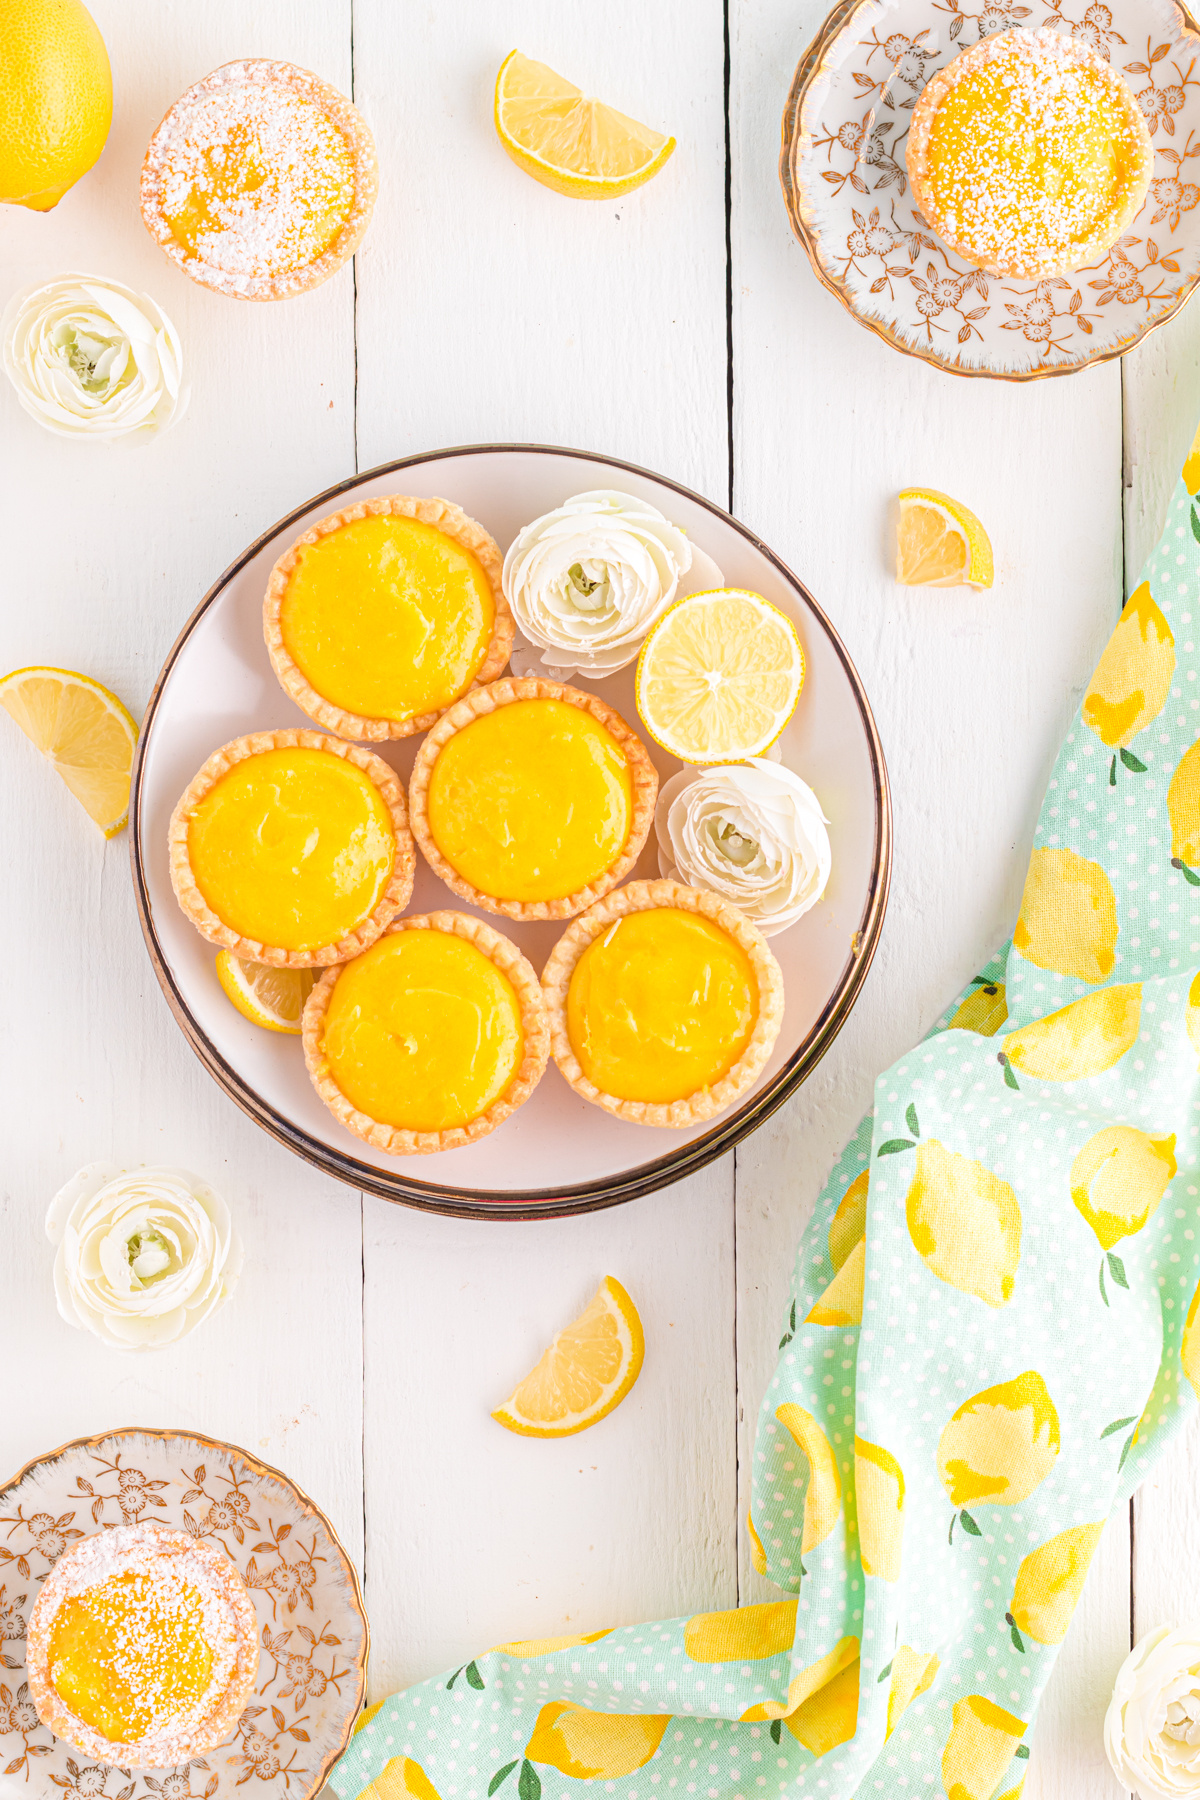 Mini lemon tarts on table with fresh lemon slices and flowers.